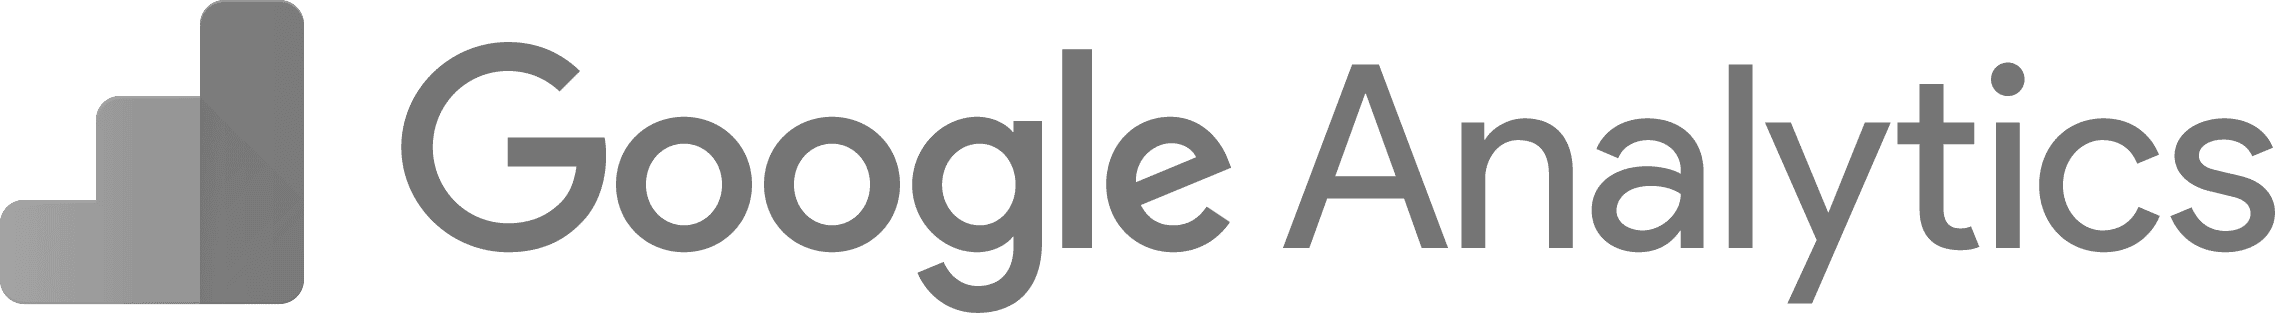 Google_Analytics_Logo_2015-1